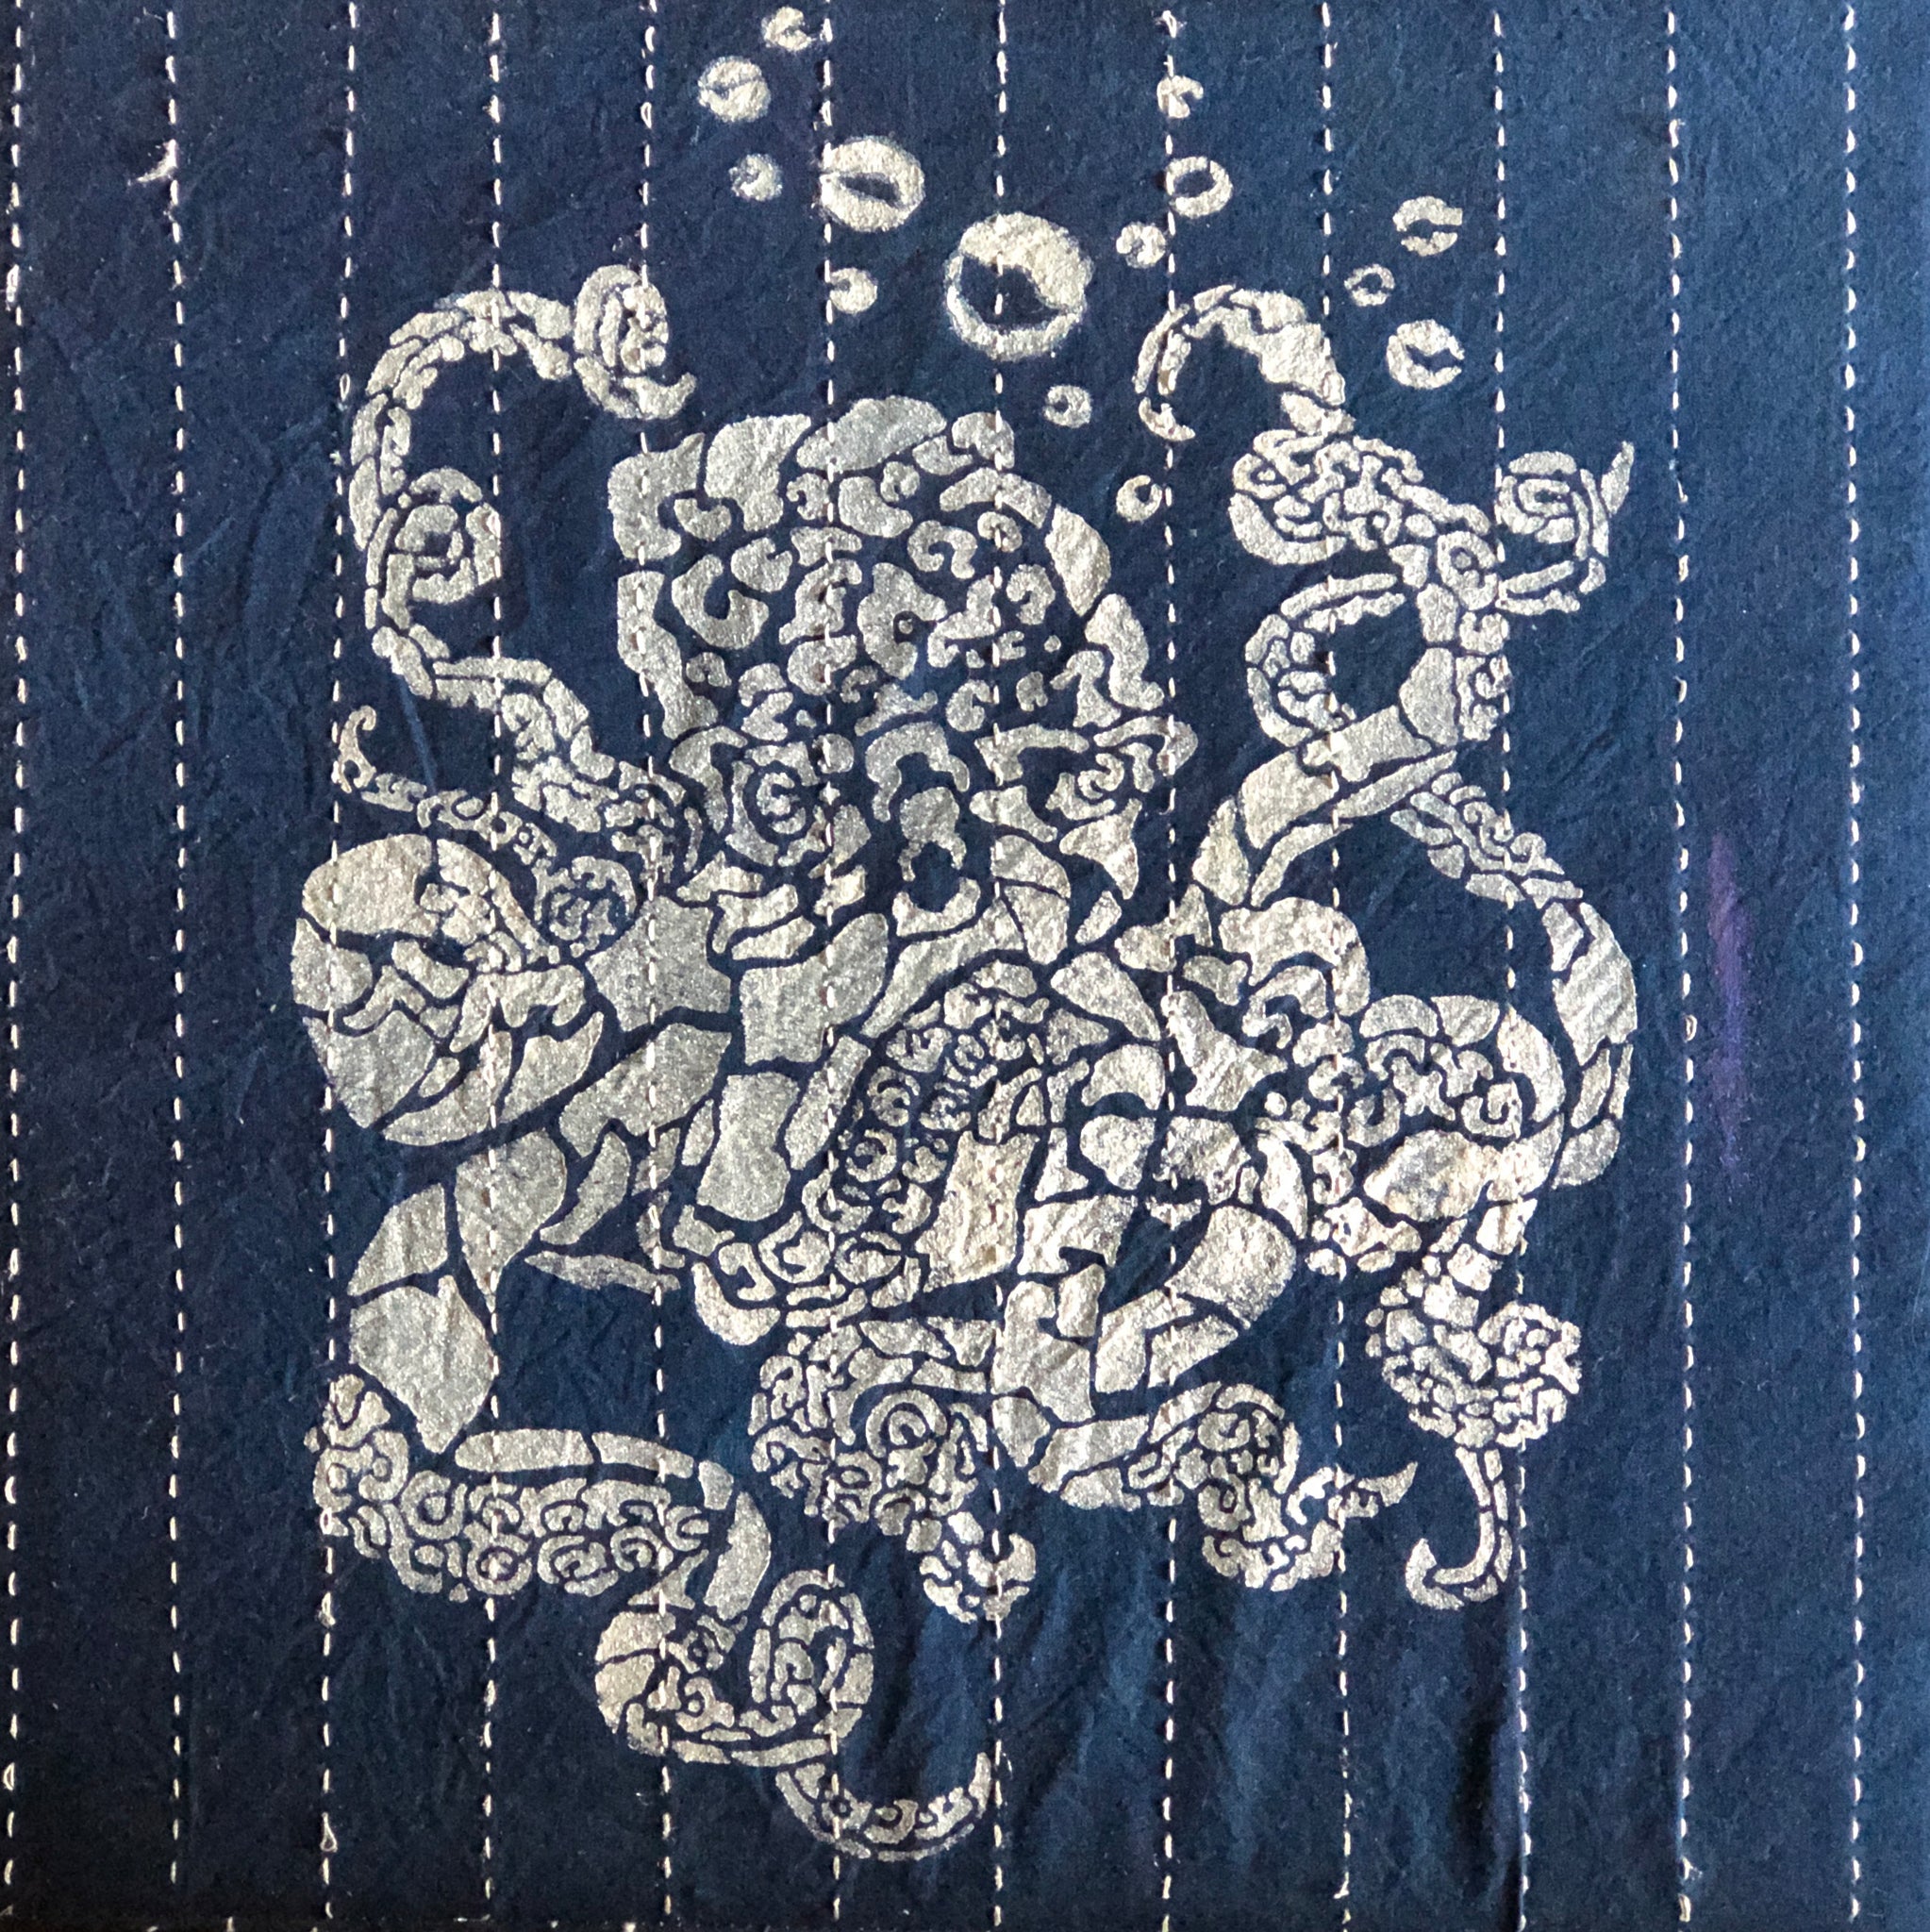 Octopus by Phyllis Petreillo Maheu